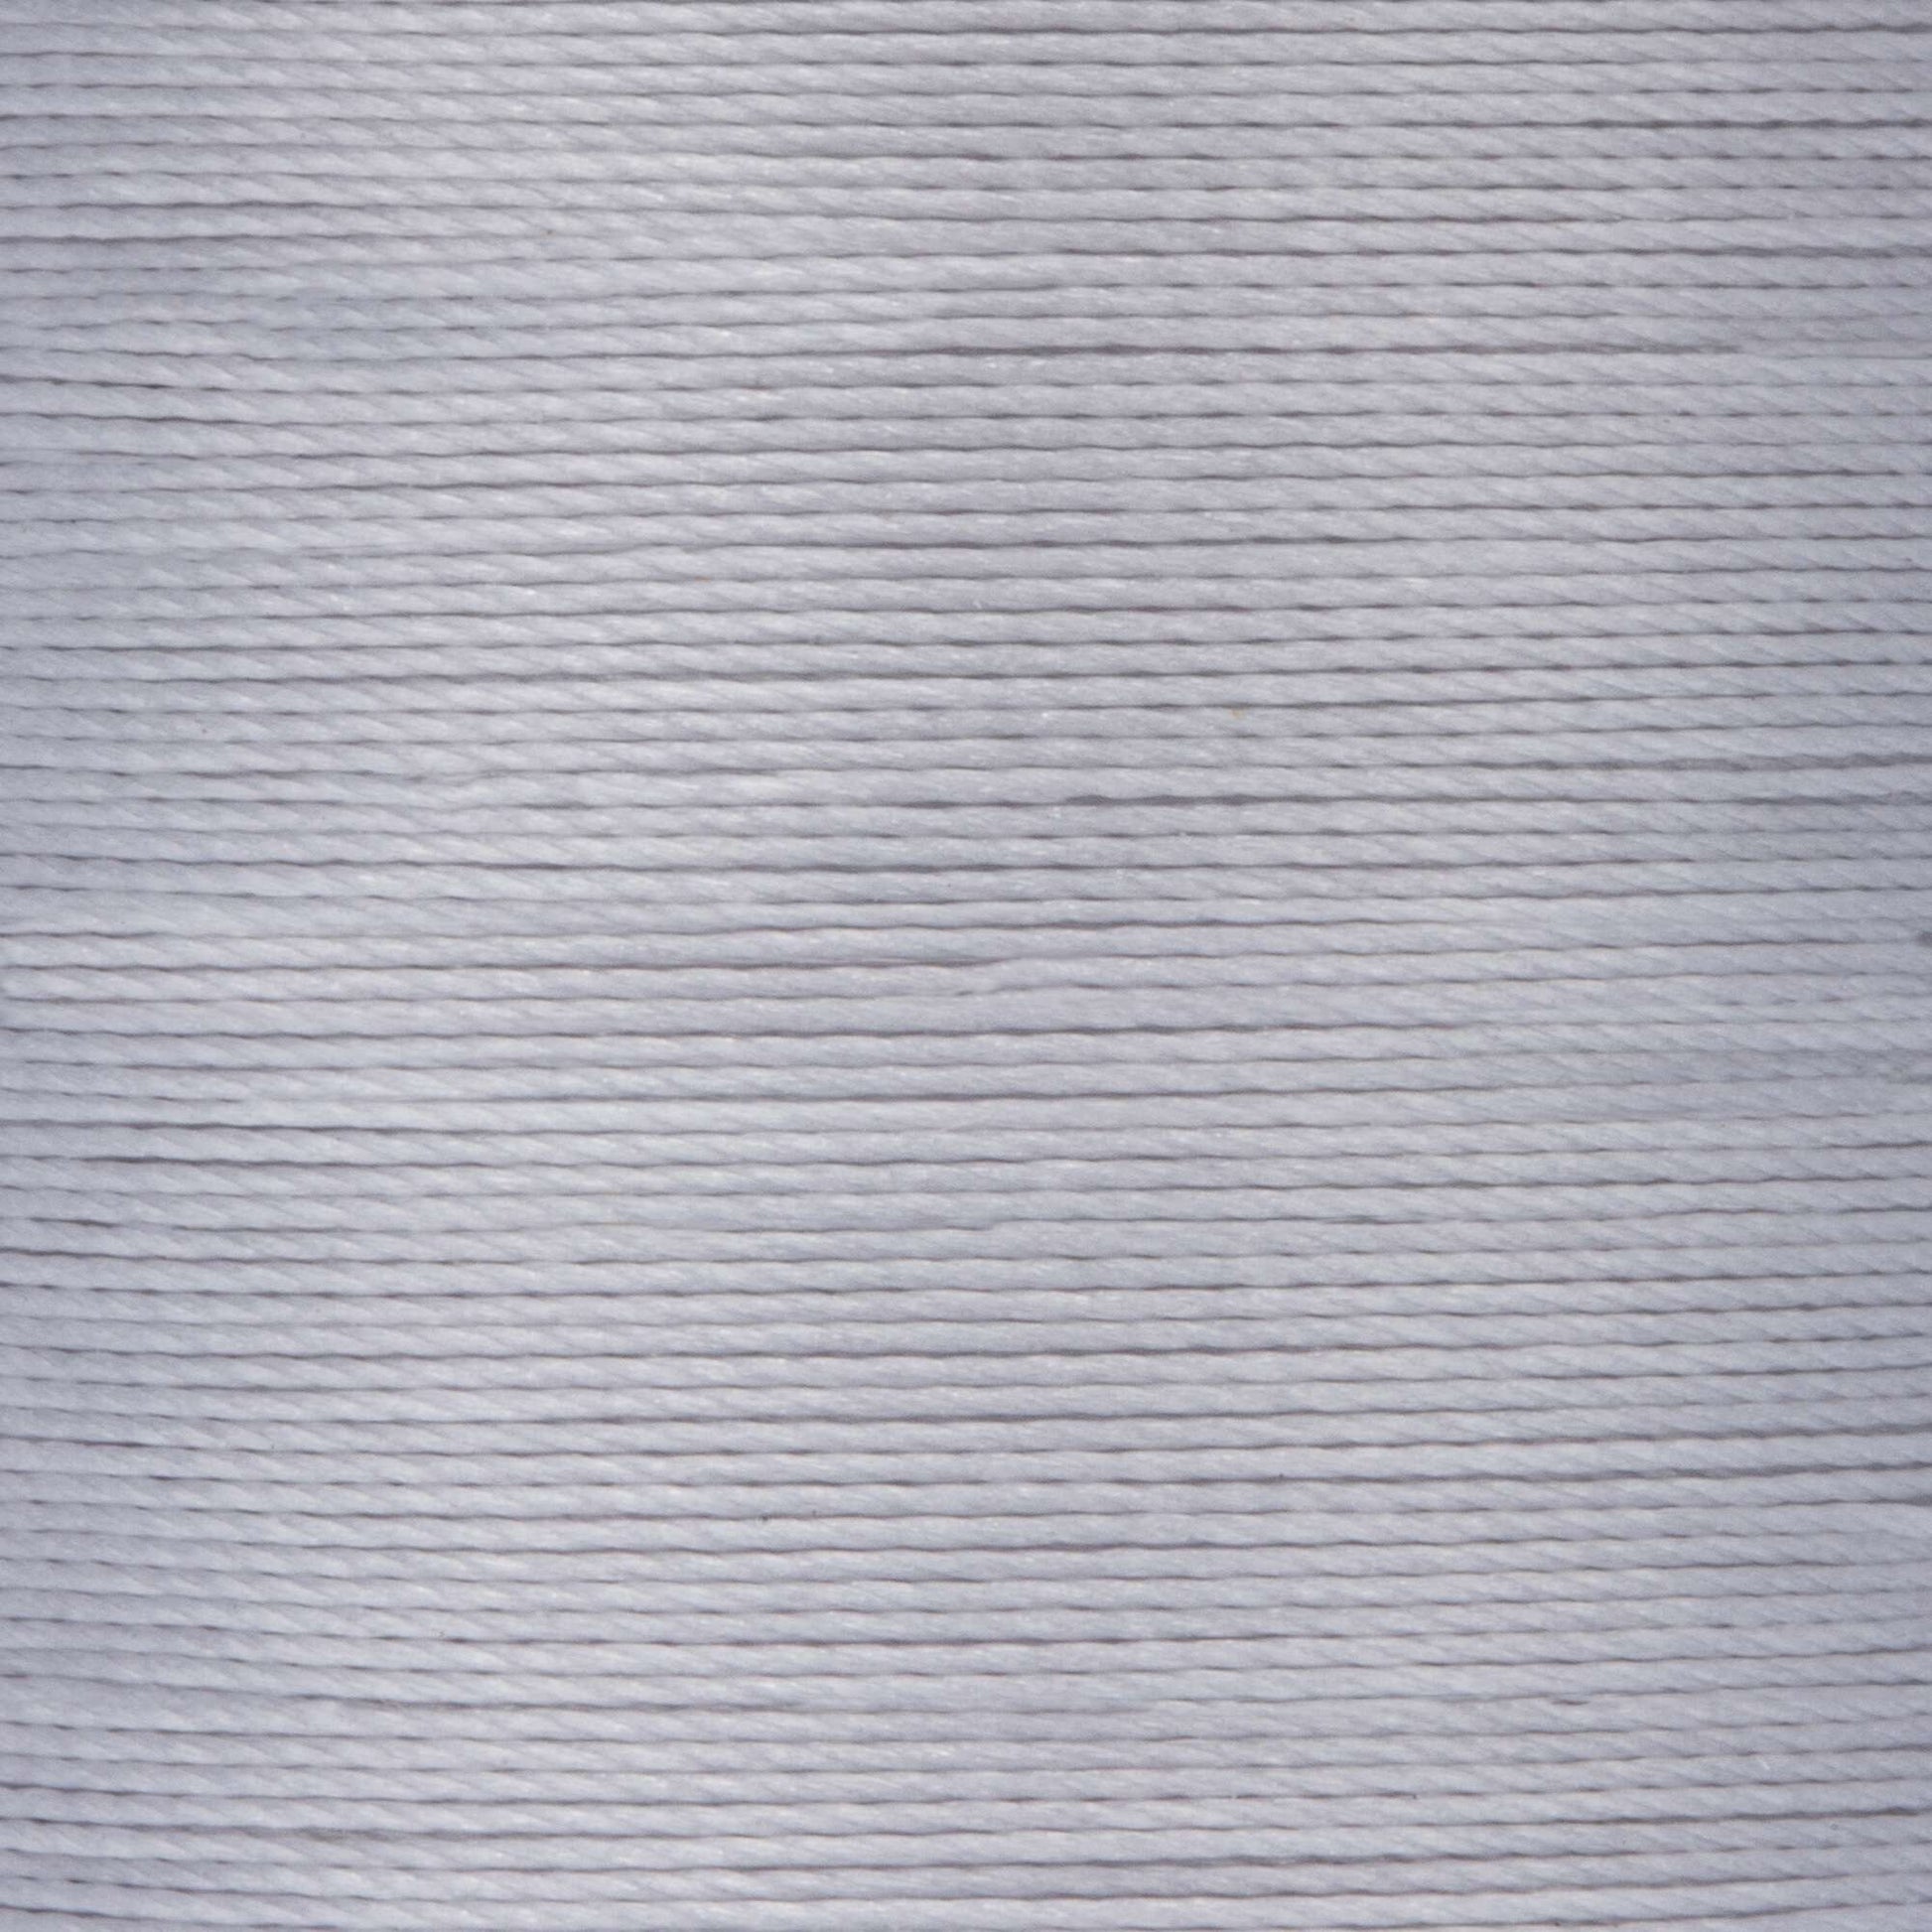 Coats & Clark Outdoor Thread - 200yds - Stonemountain & Daughter Fabrics